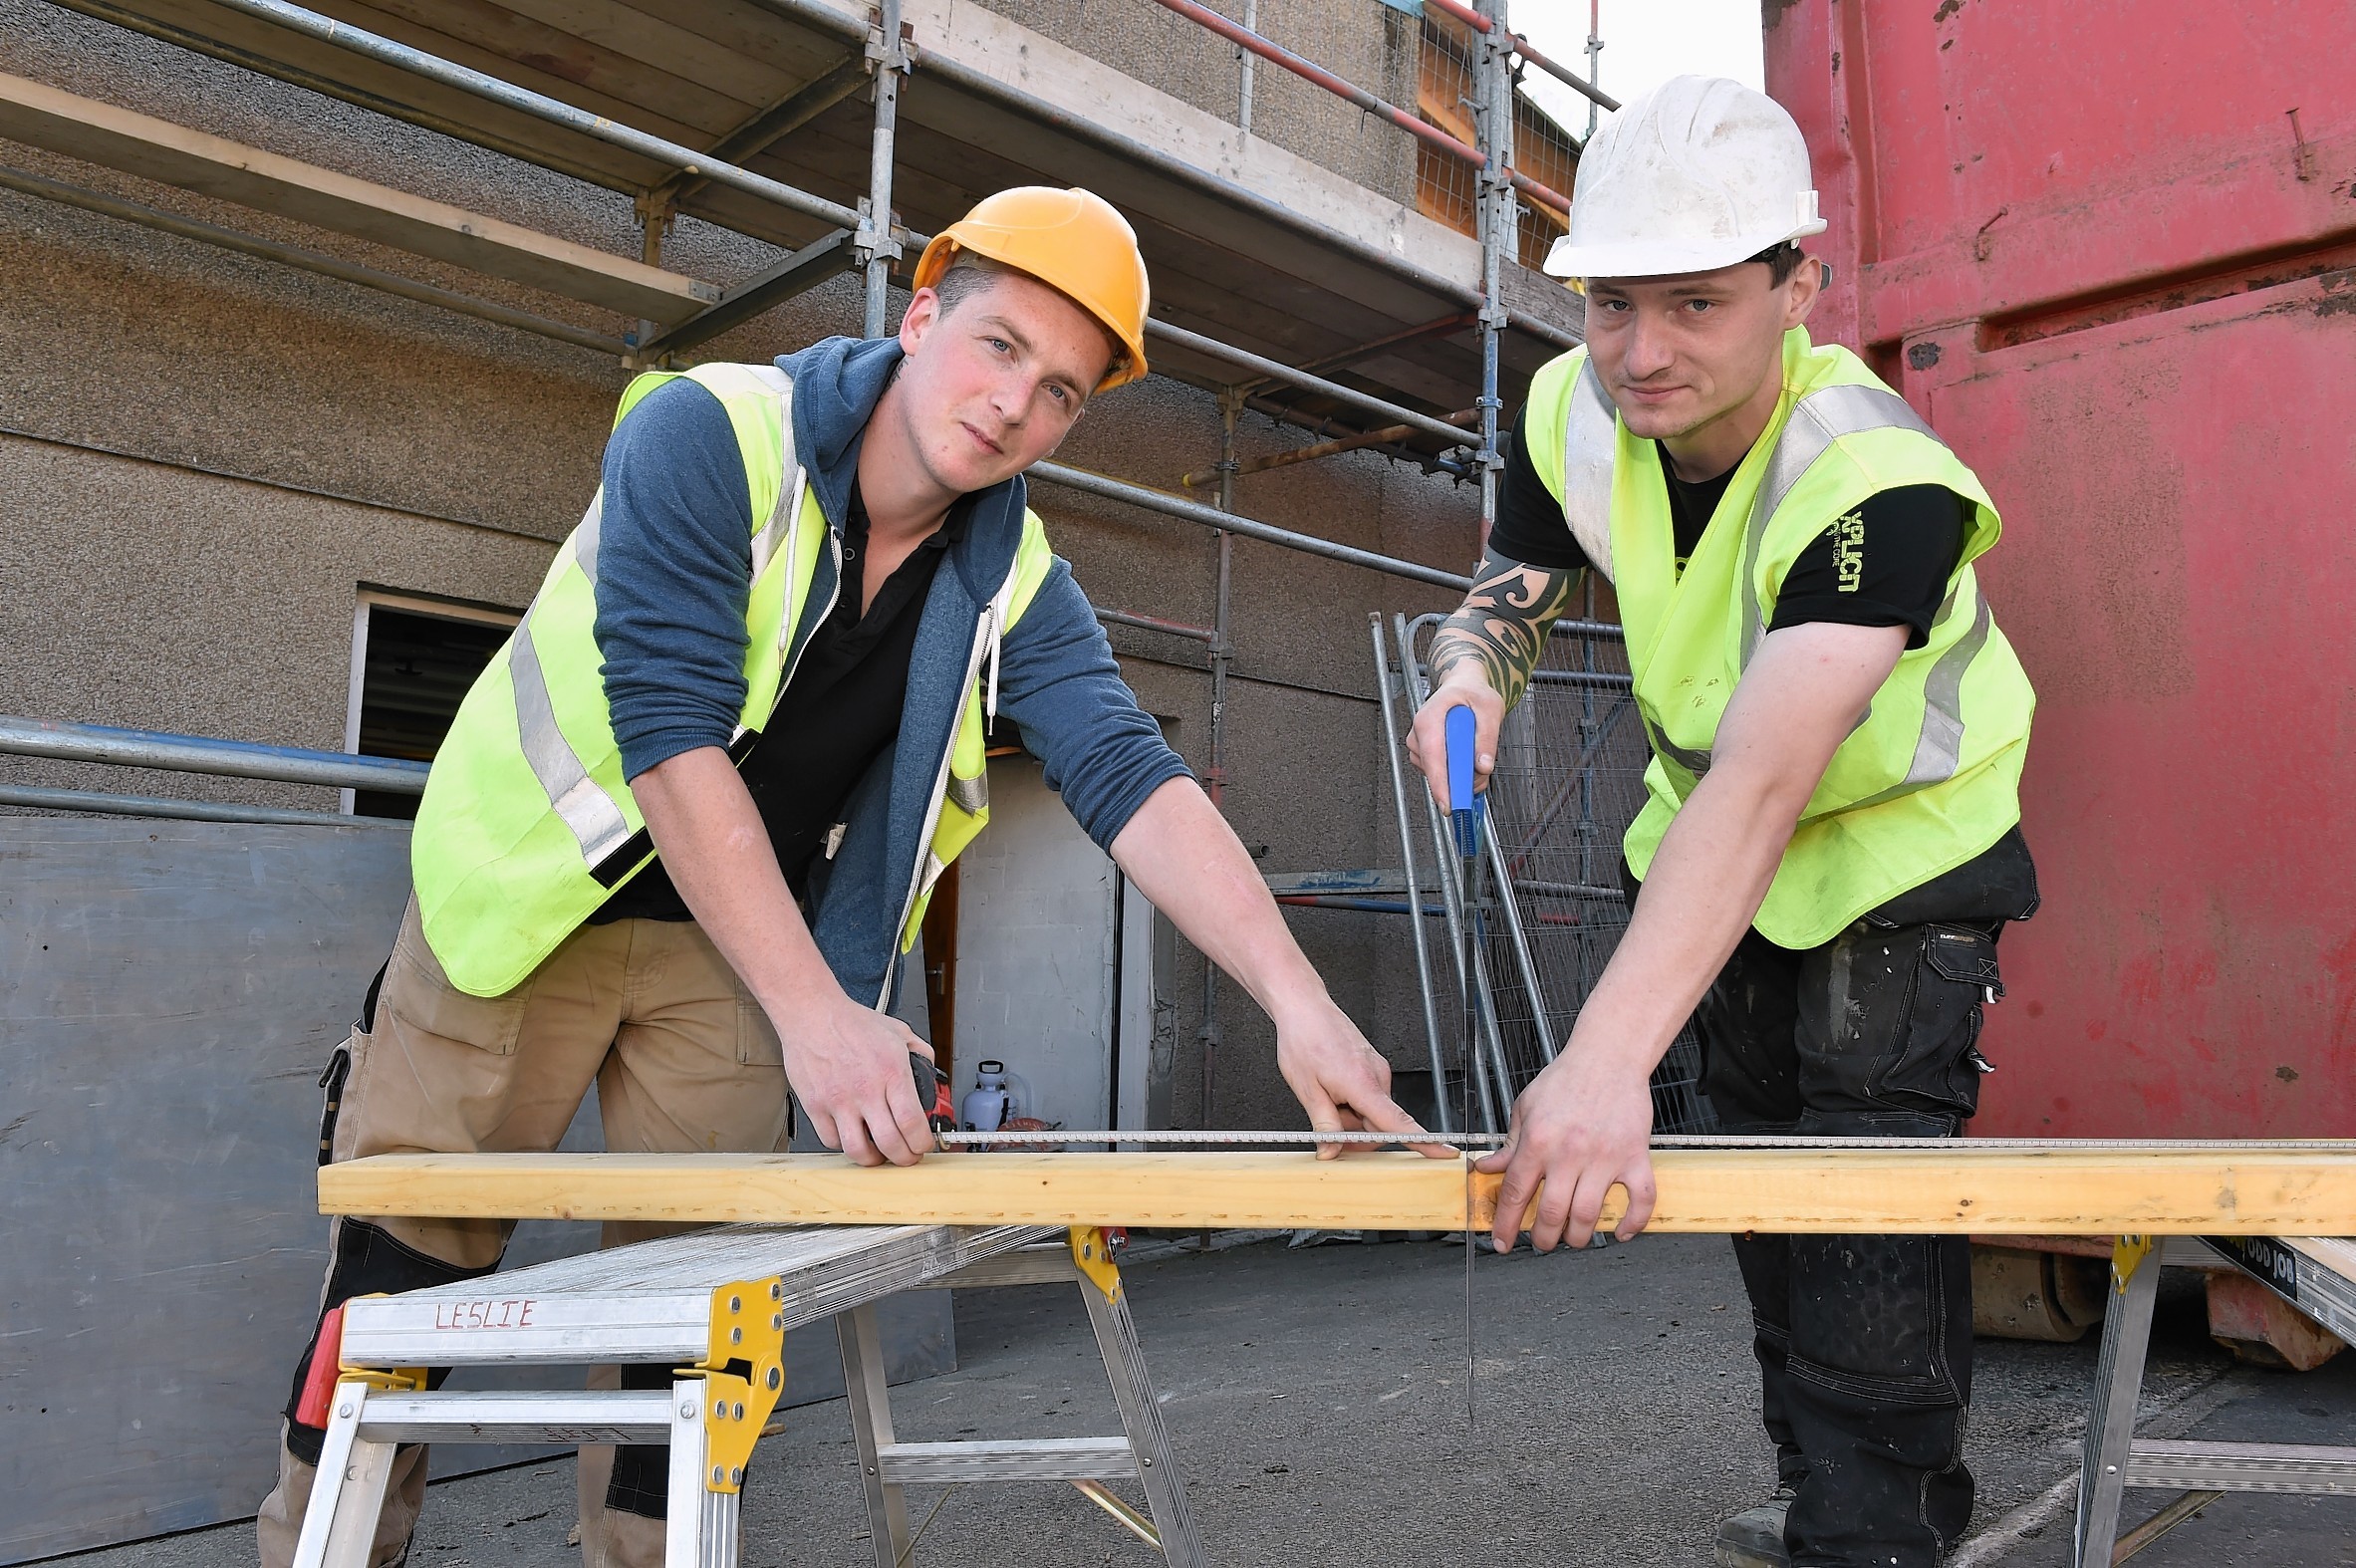 Apprentice joiners Ben Hammond (left) and Matt Markuszewski working on the roof of the Sea Cadets building in Peterhead.